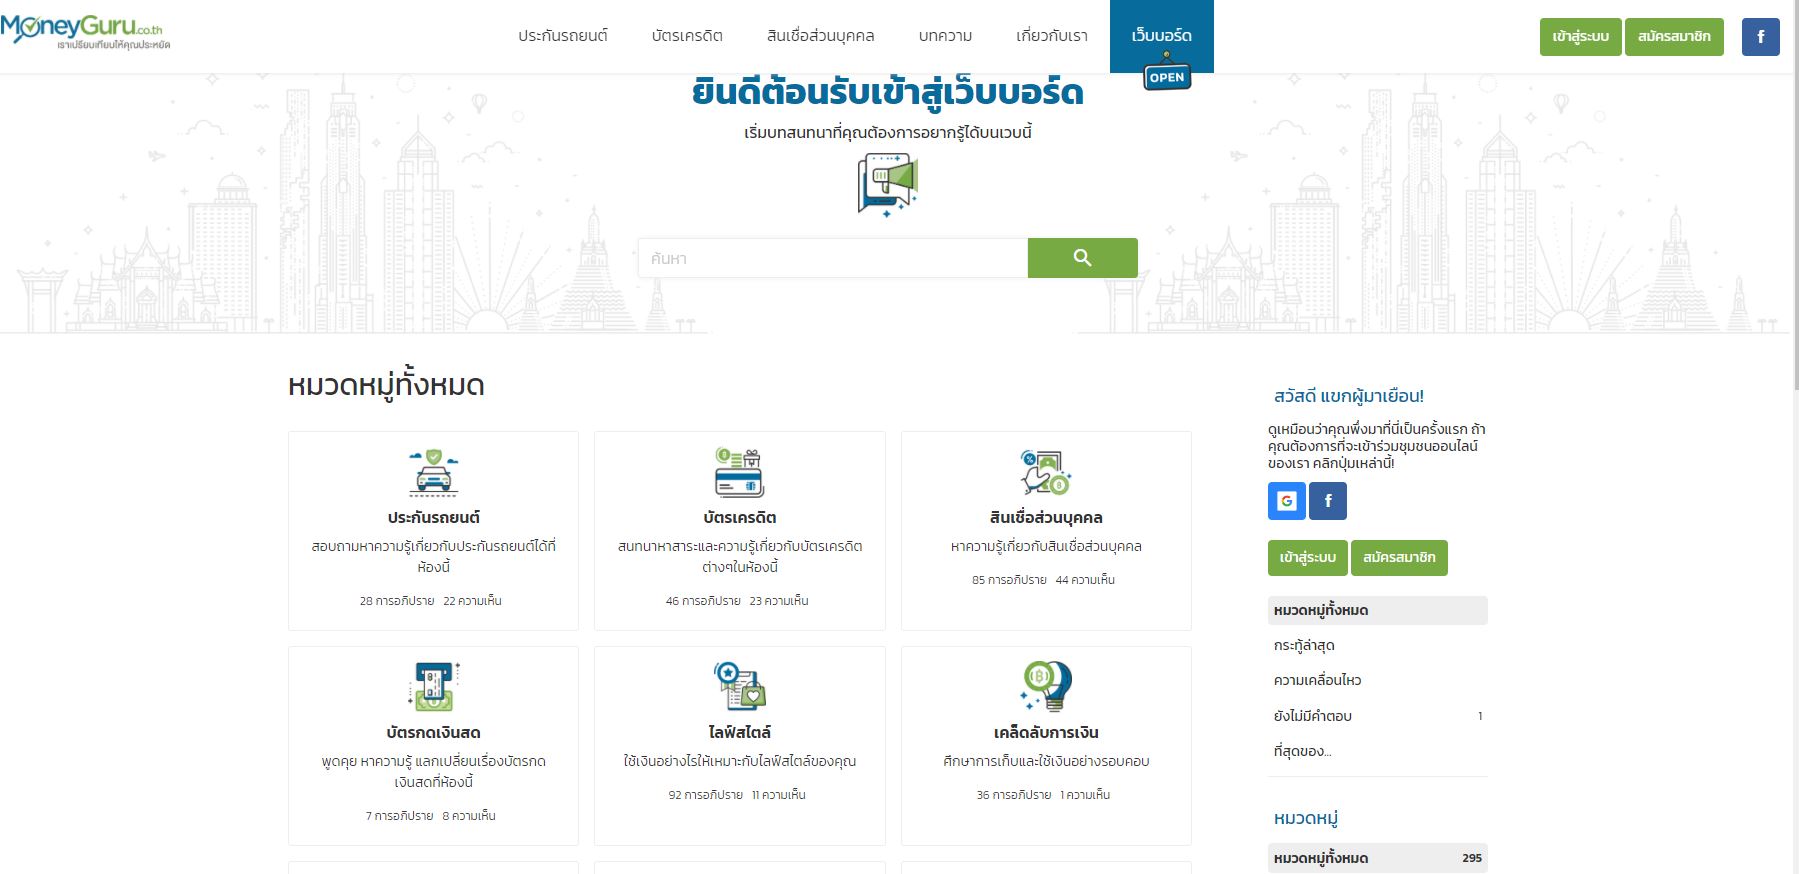 MoneyGuru เปิดตัวเว็บบอร์ดทางการเงินแห่งแรกในประเทศไทย